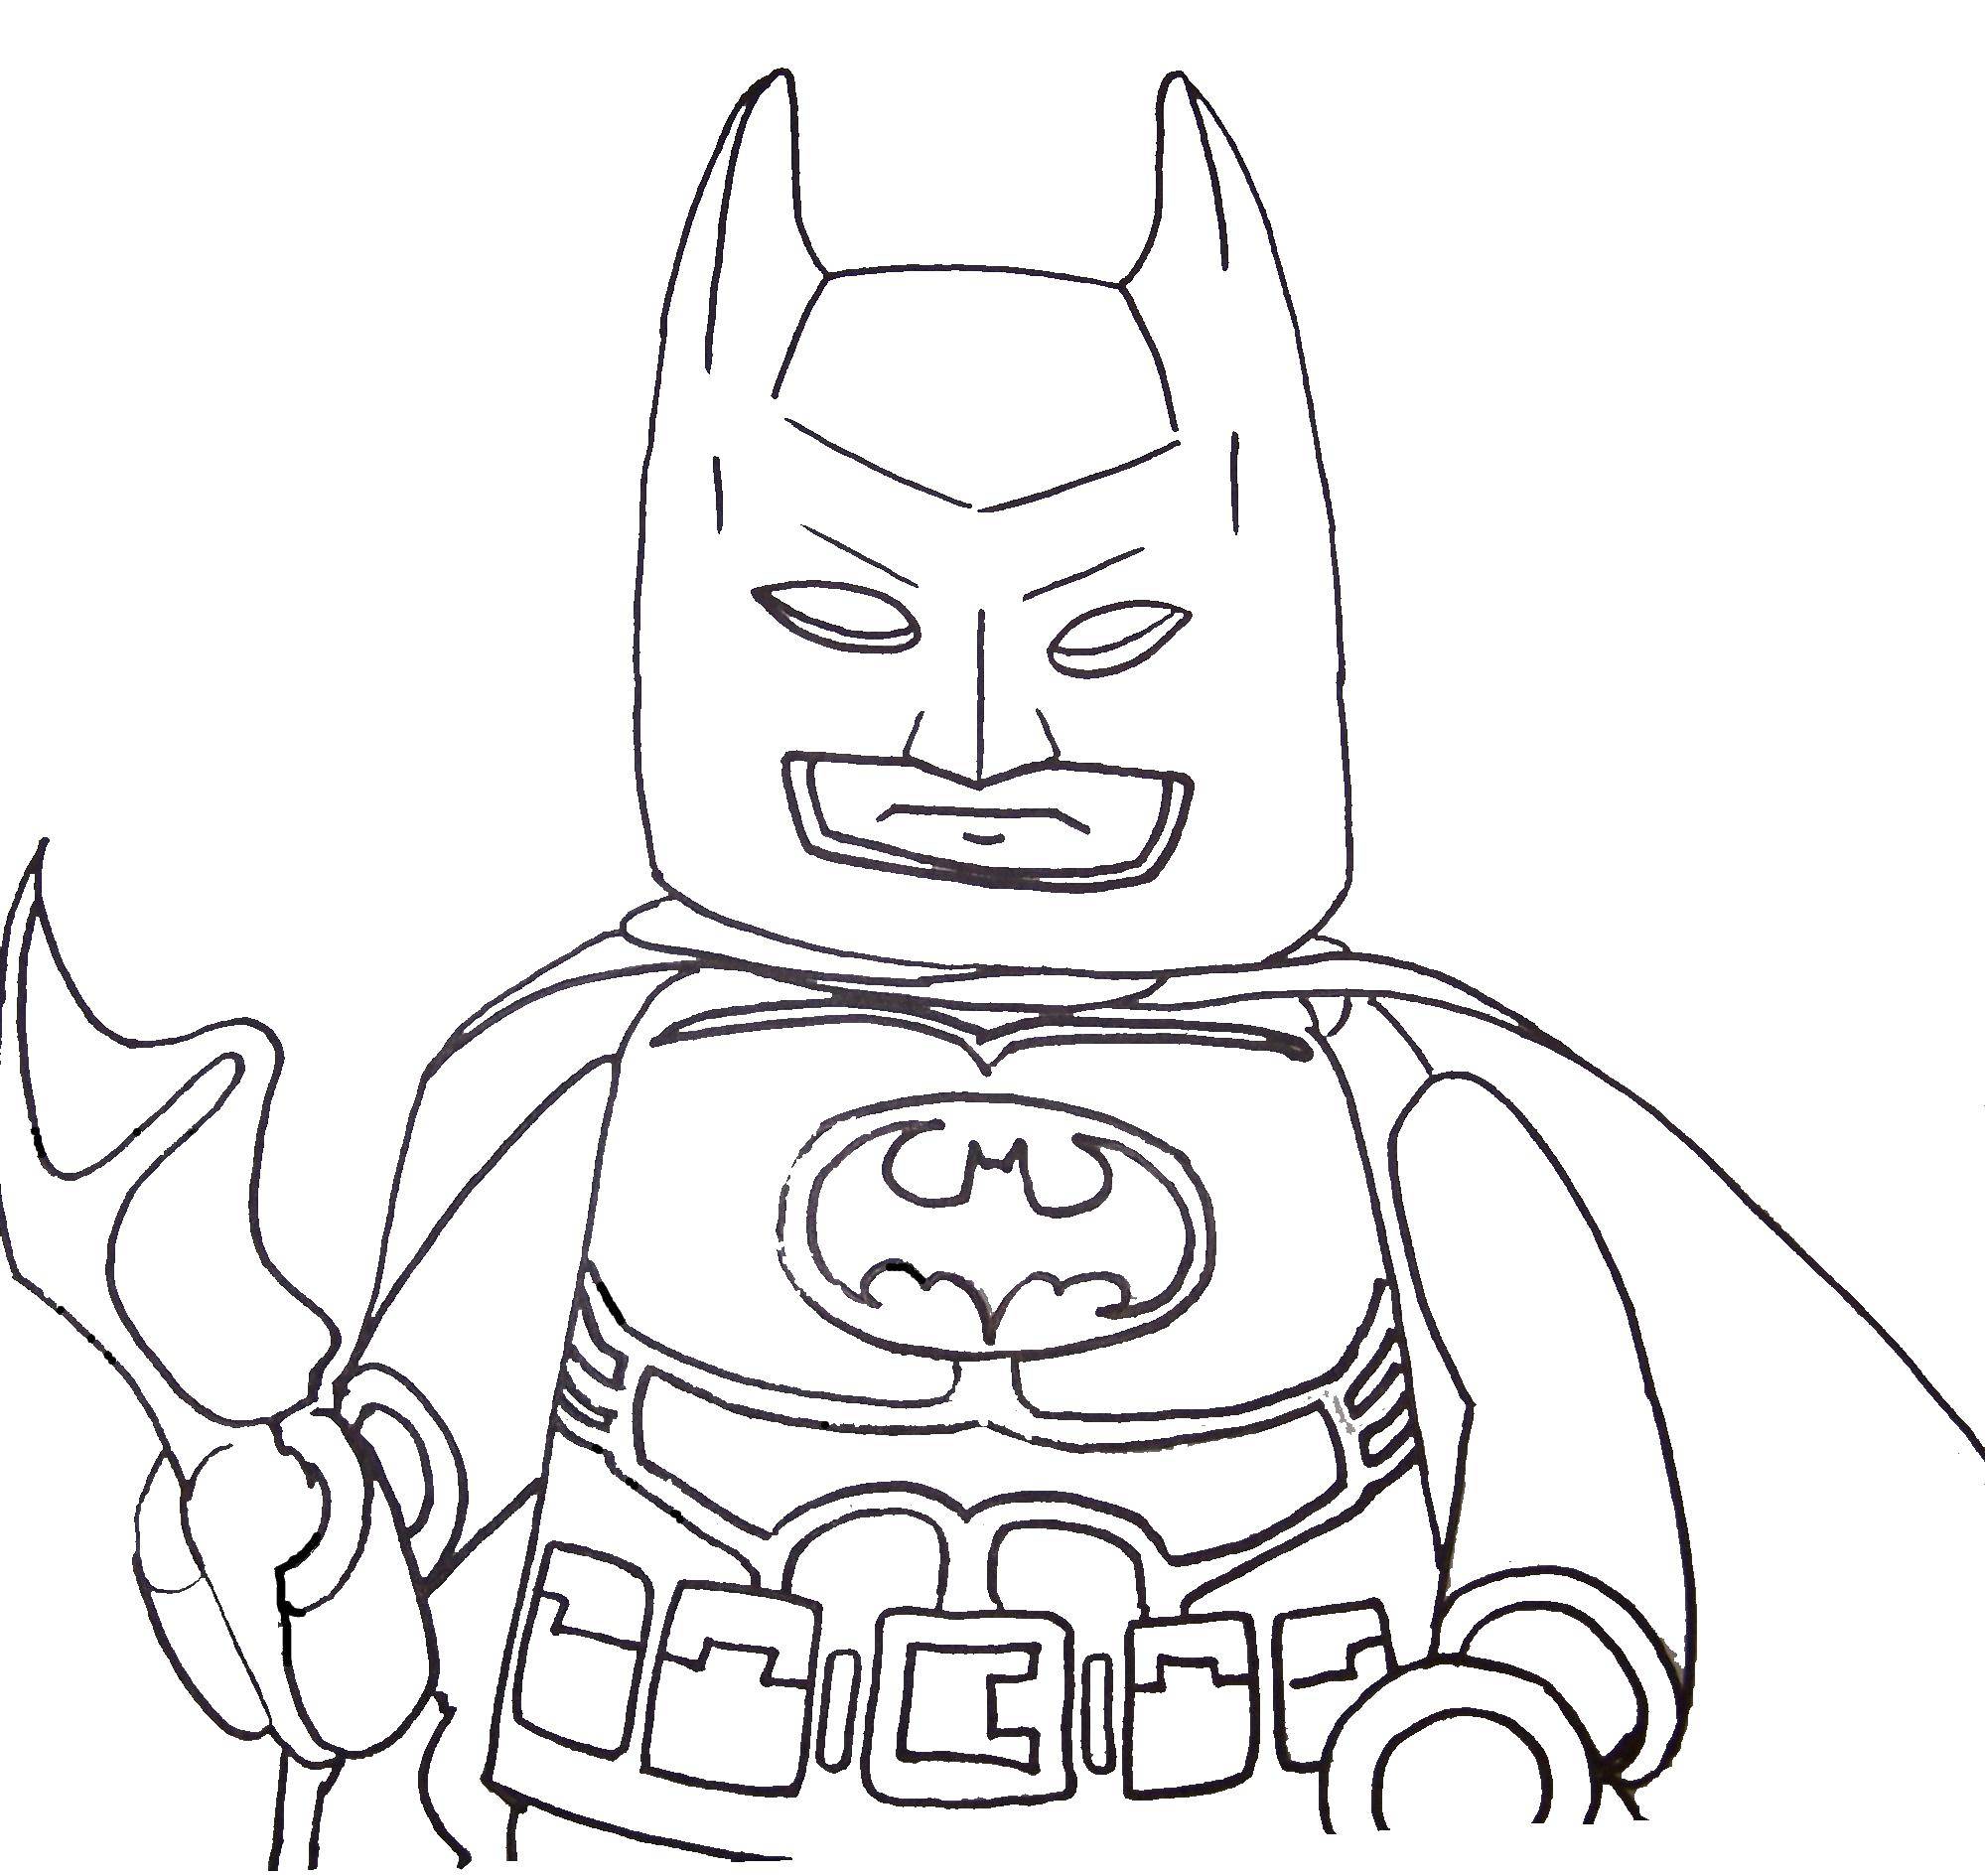 Coloring LEGO Batman. Category LEGO. Tags:  LEGO Batman.